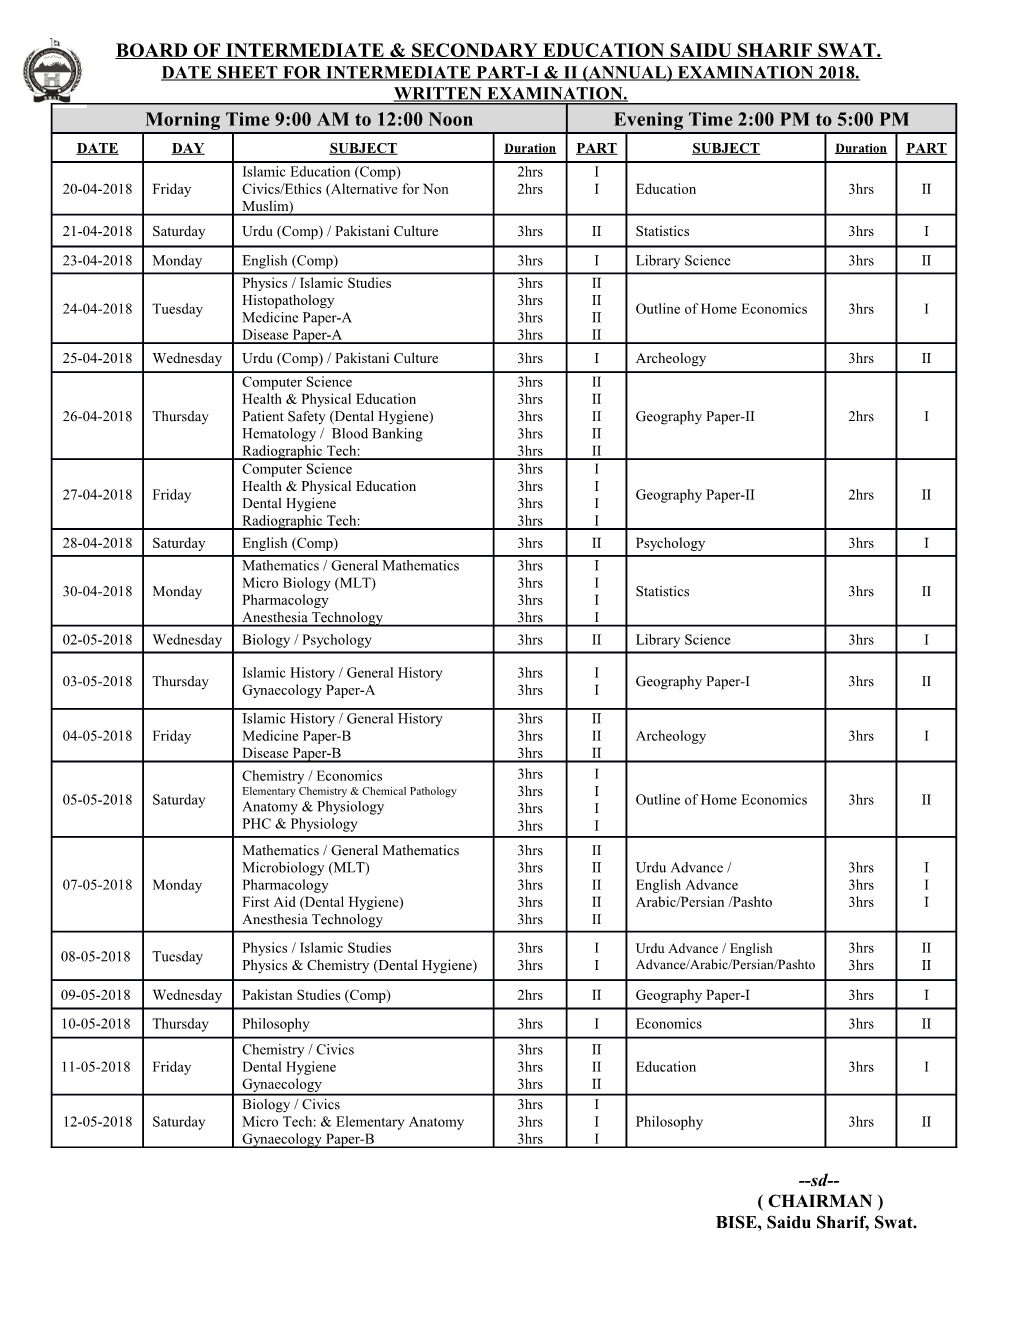 Date Sheet for Intermediate Part-I & Ii (Annual) Examination 2018